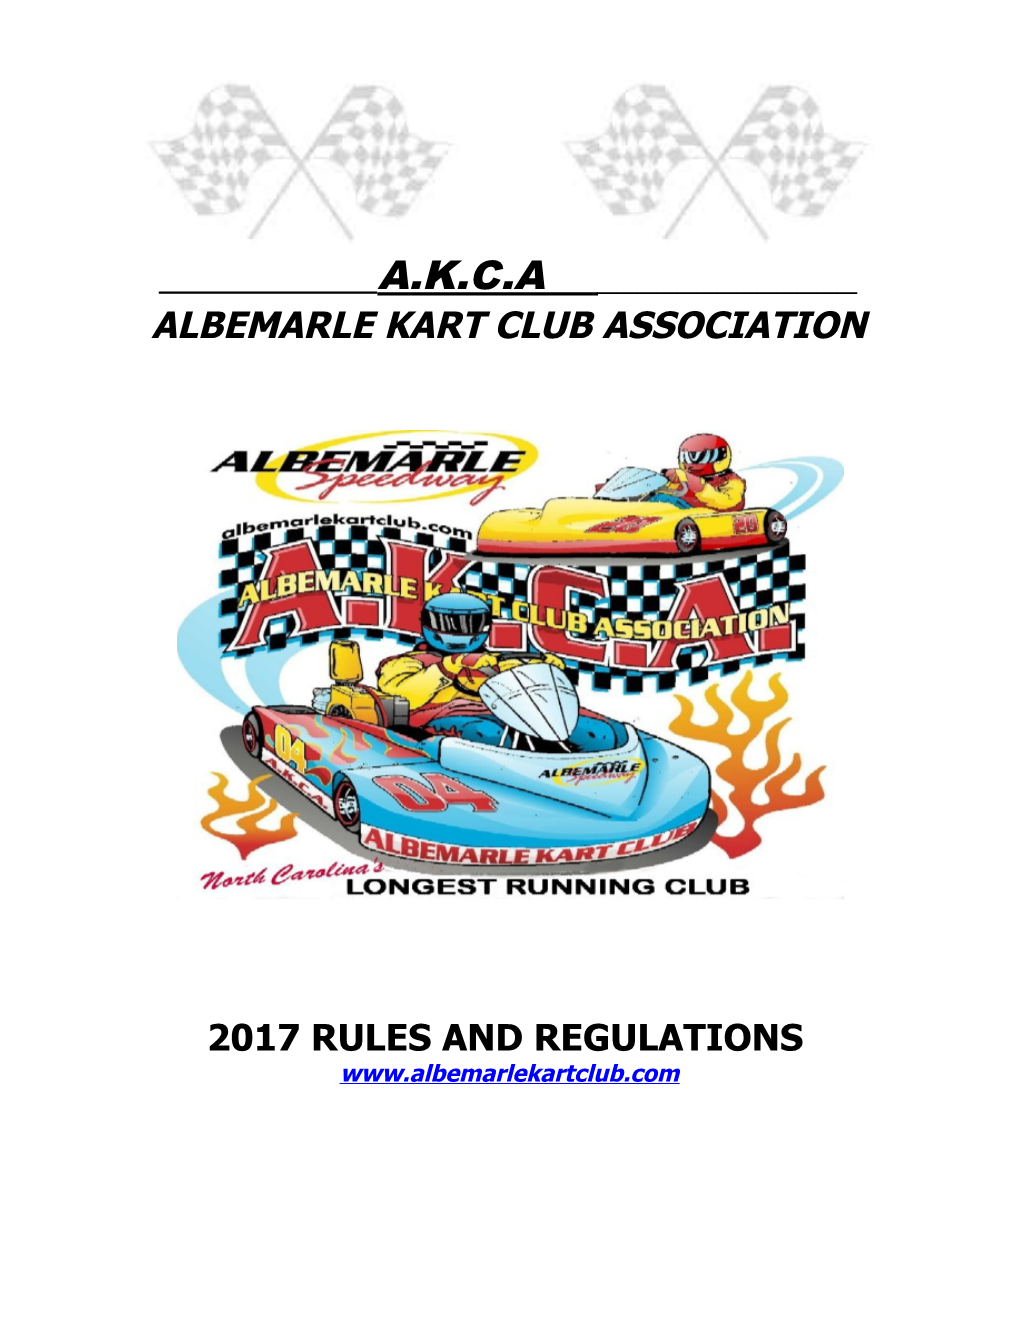 Albemarle Kart Club Association